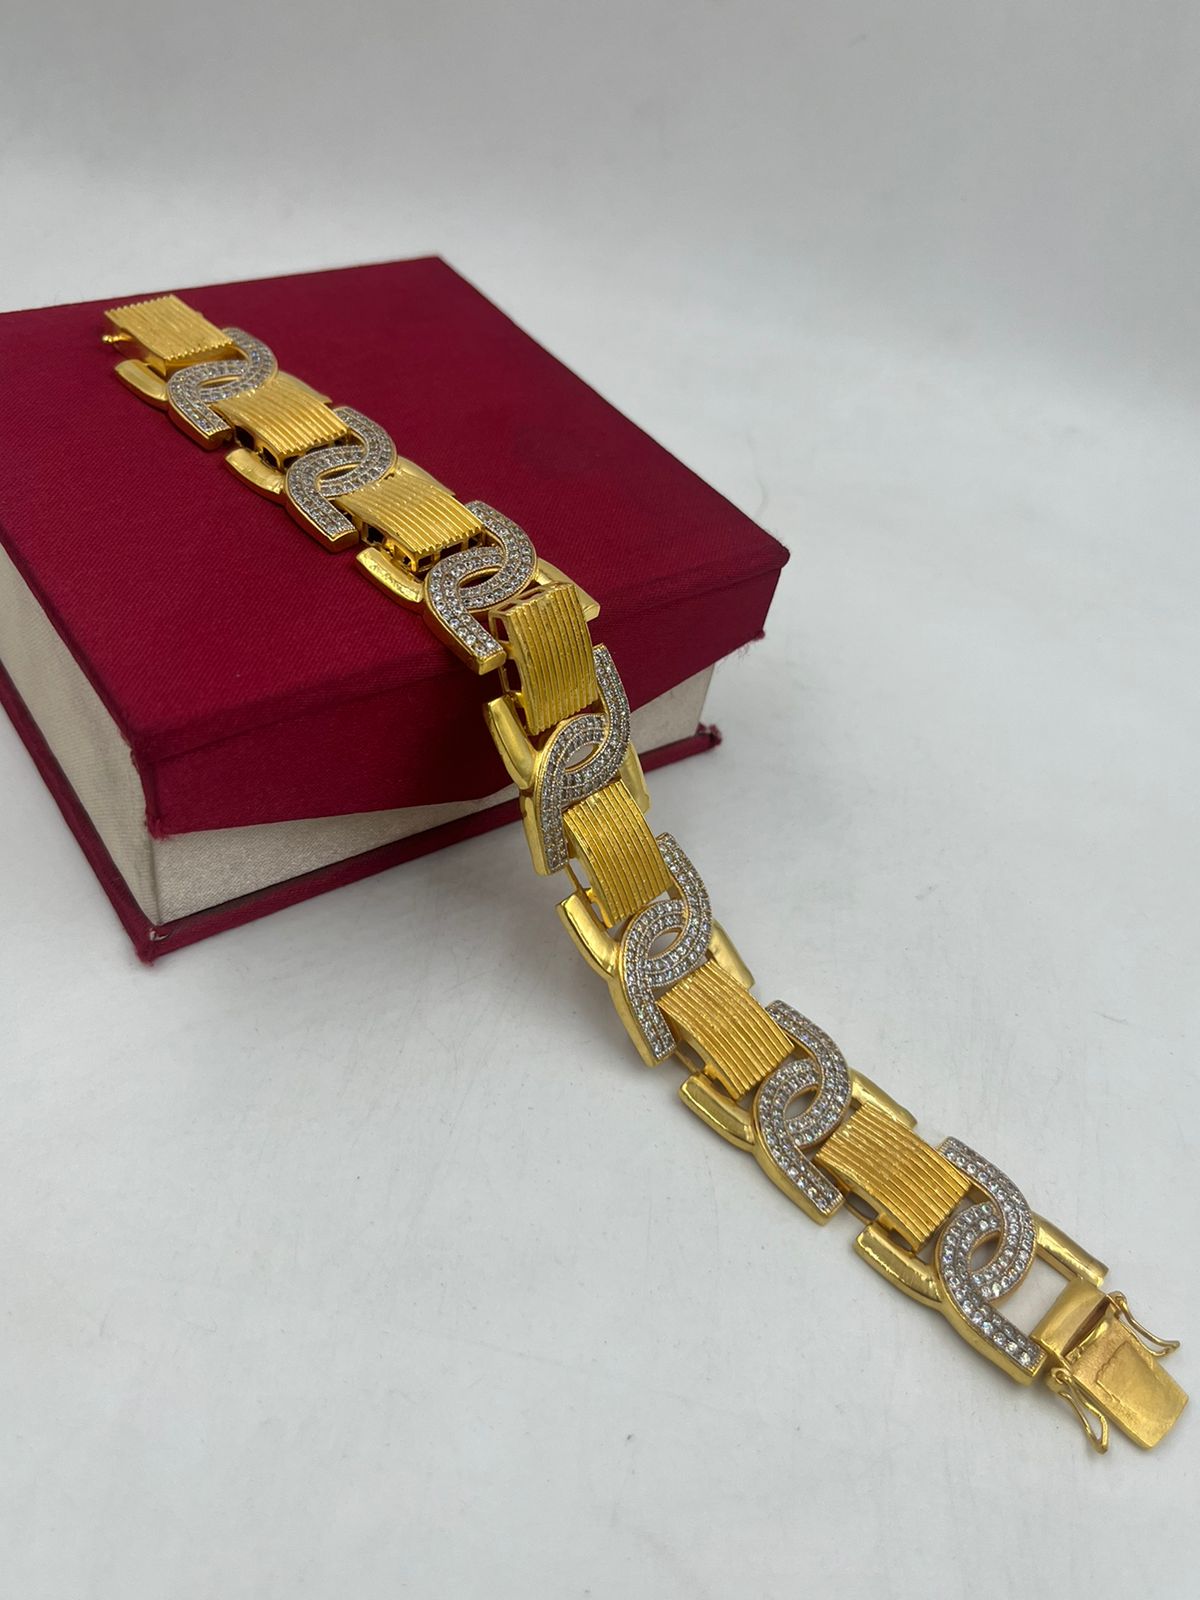 1 Gram Gold Forming Pokal Best Quality Gold Plated Bracelet For Men - Style  B788, गोल्ड प्लेटेड ब्रेसलेट - Soni Fashion, Rajkot | ID: 2851675109233